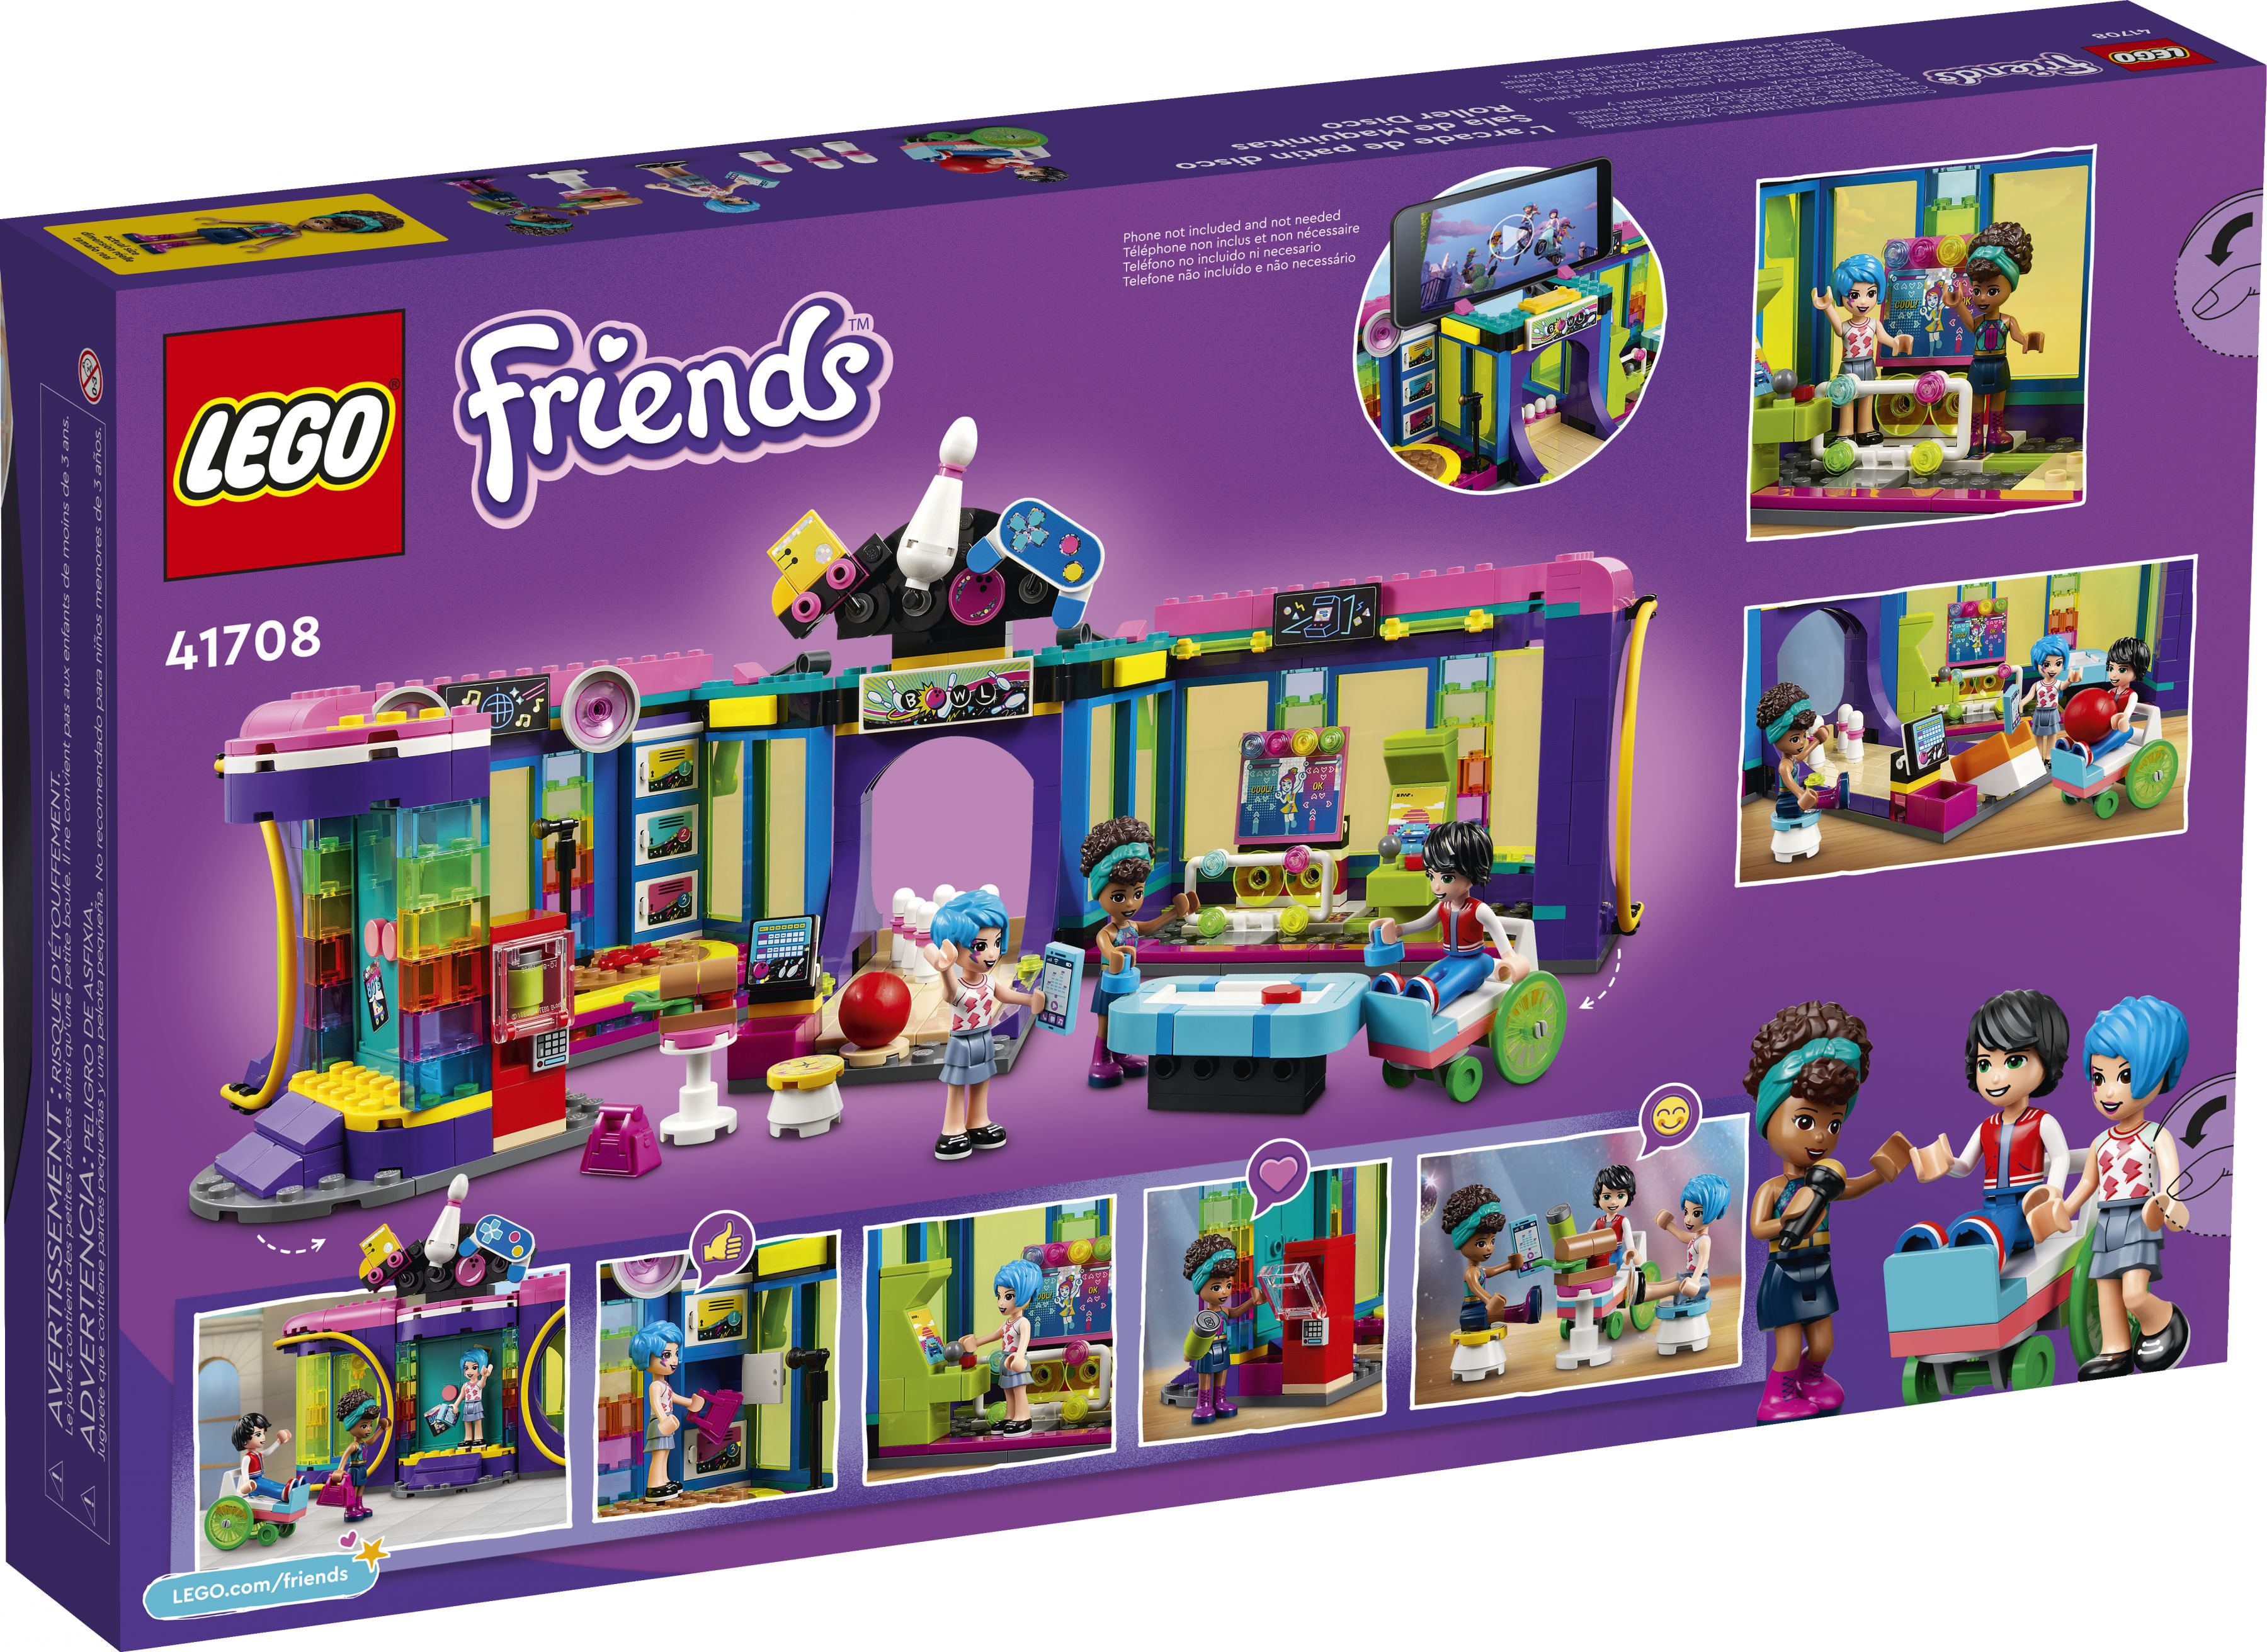 LEGO Friends 41708 Rollschuhdisco LEGO_41708_Box5_v39.jpg